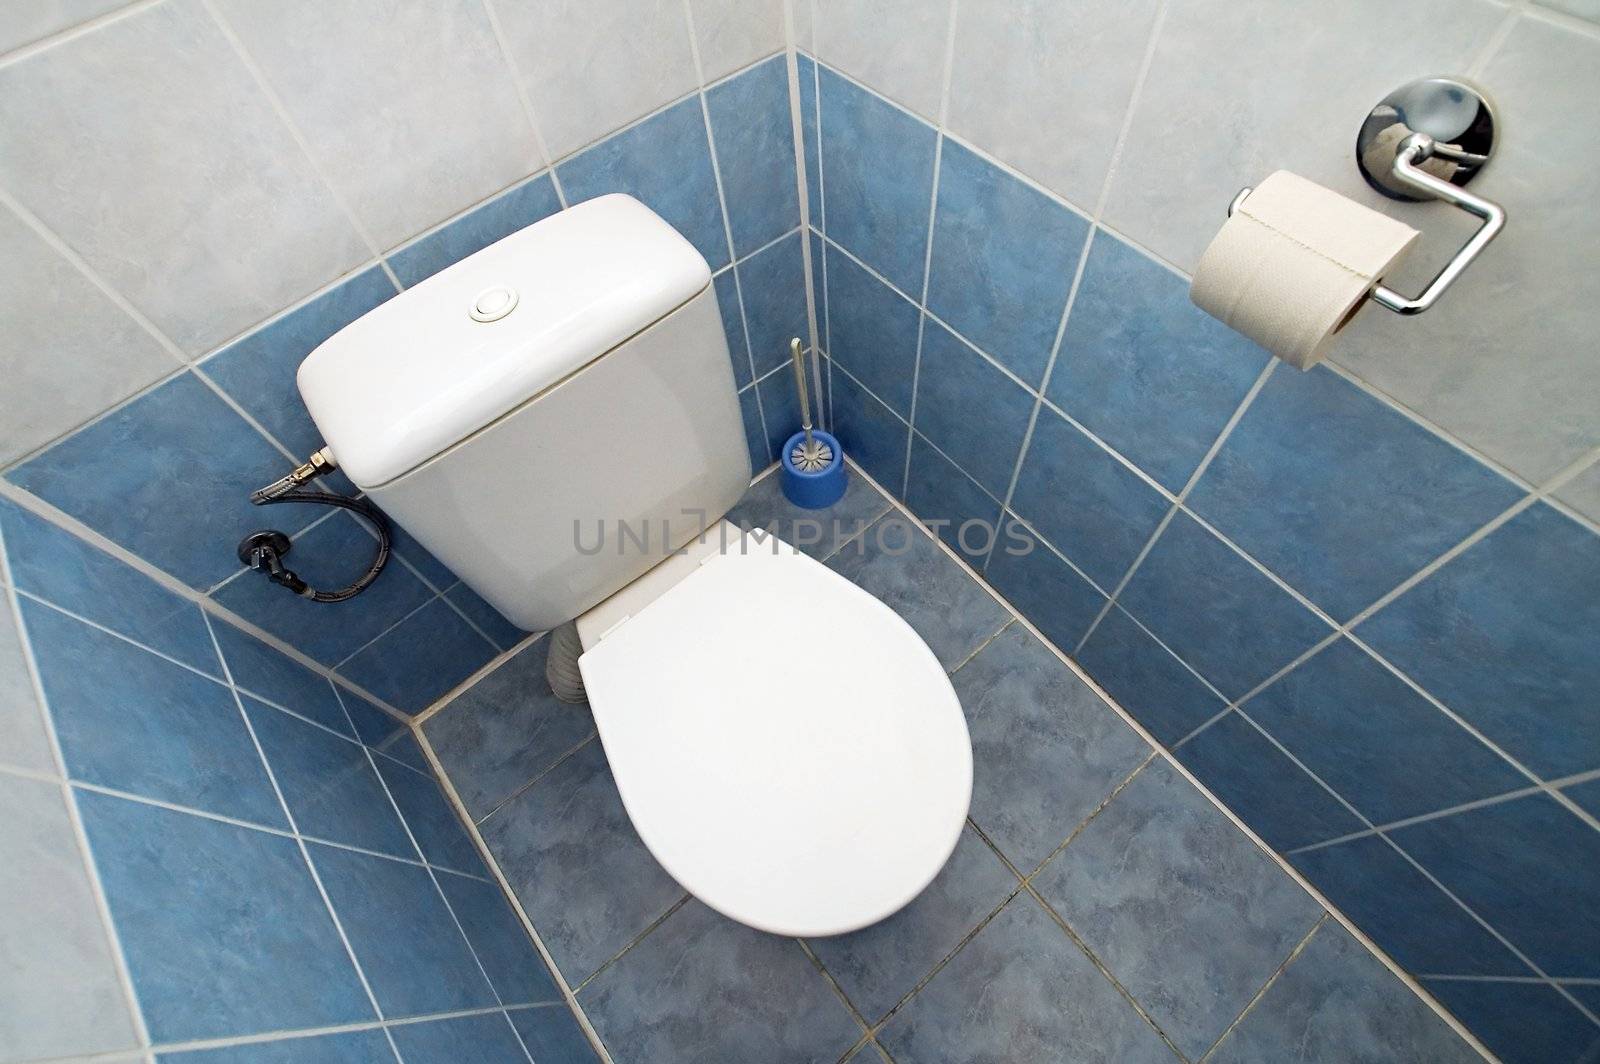 white toilet by rorem